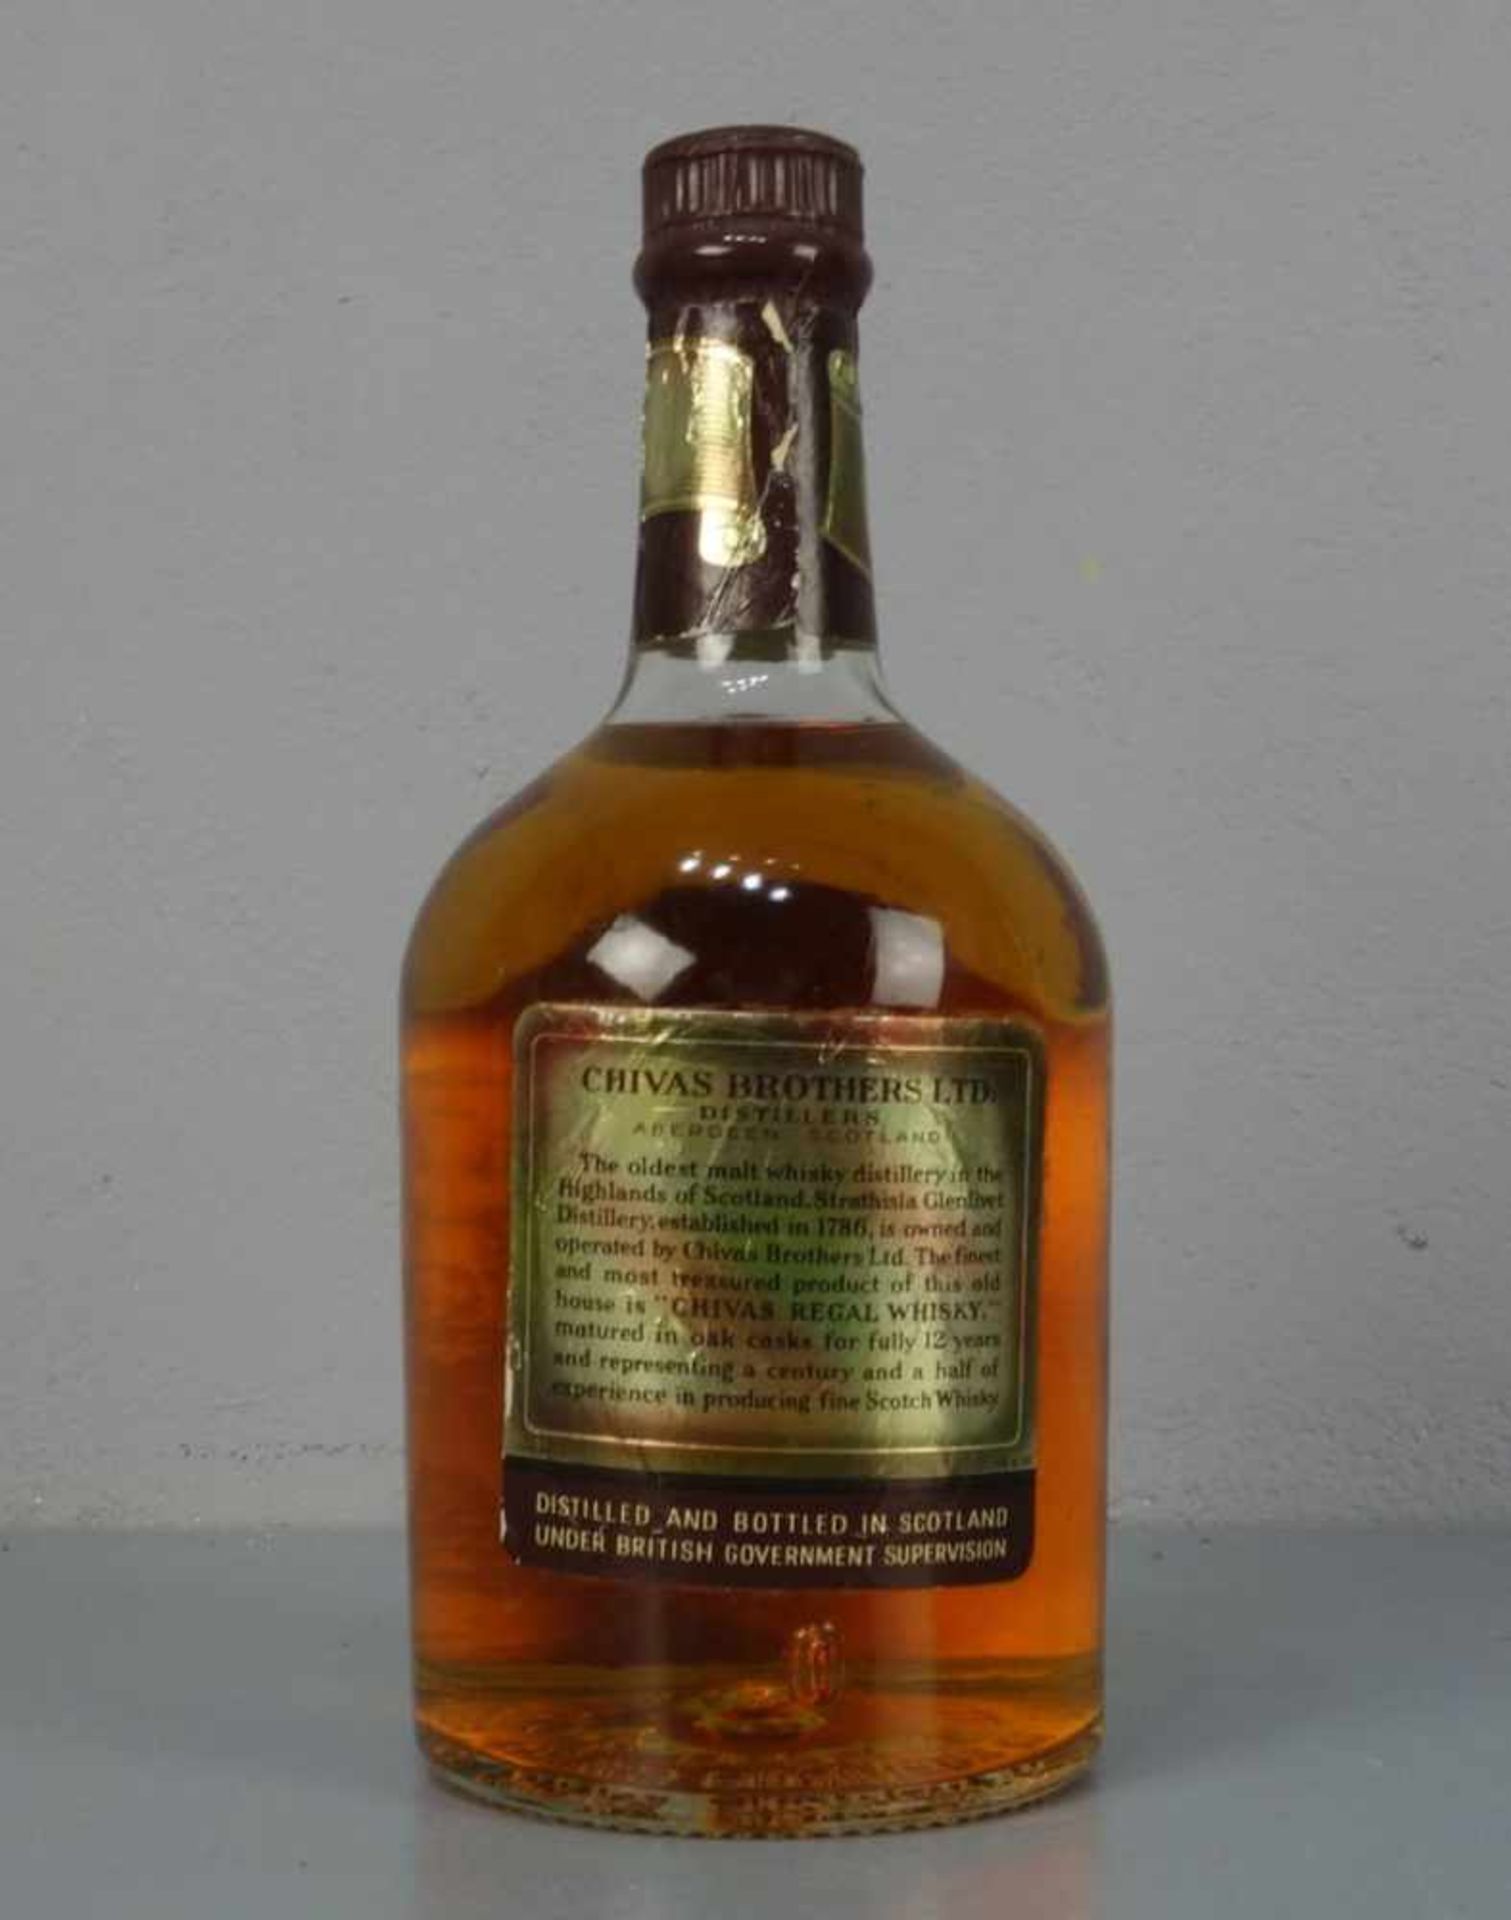 FLASCHE SCOTCH WHISKY: "Chivas Regal Blended Scotch Whisky - Product of Scotland, 4/5 Quart", Chivas - Bild 2 aus 3